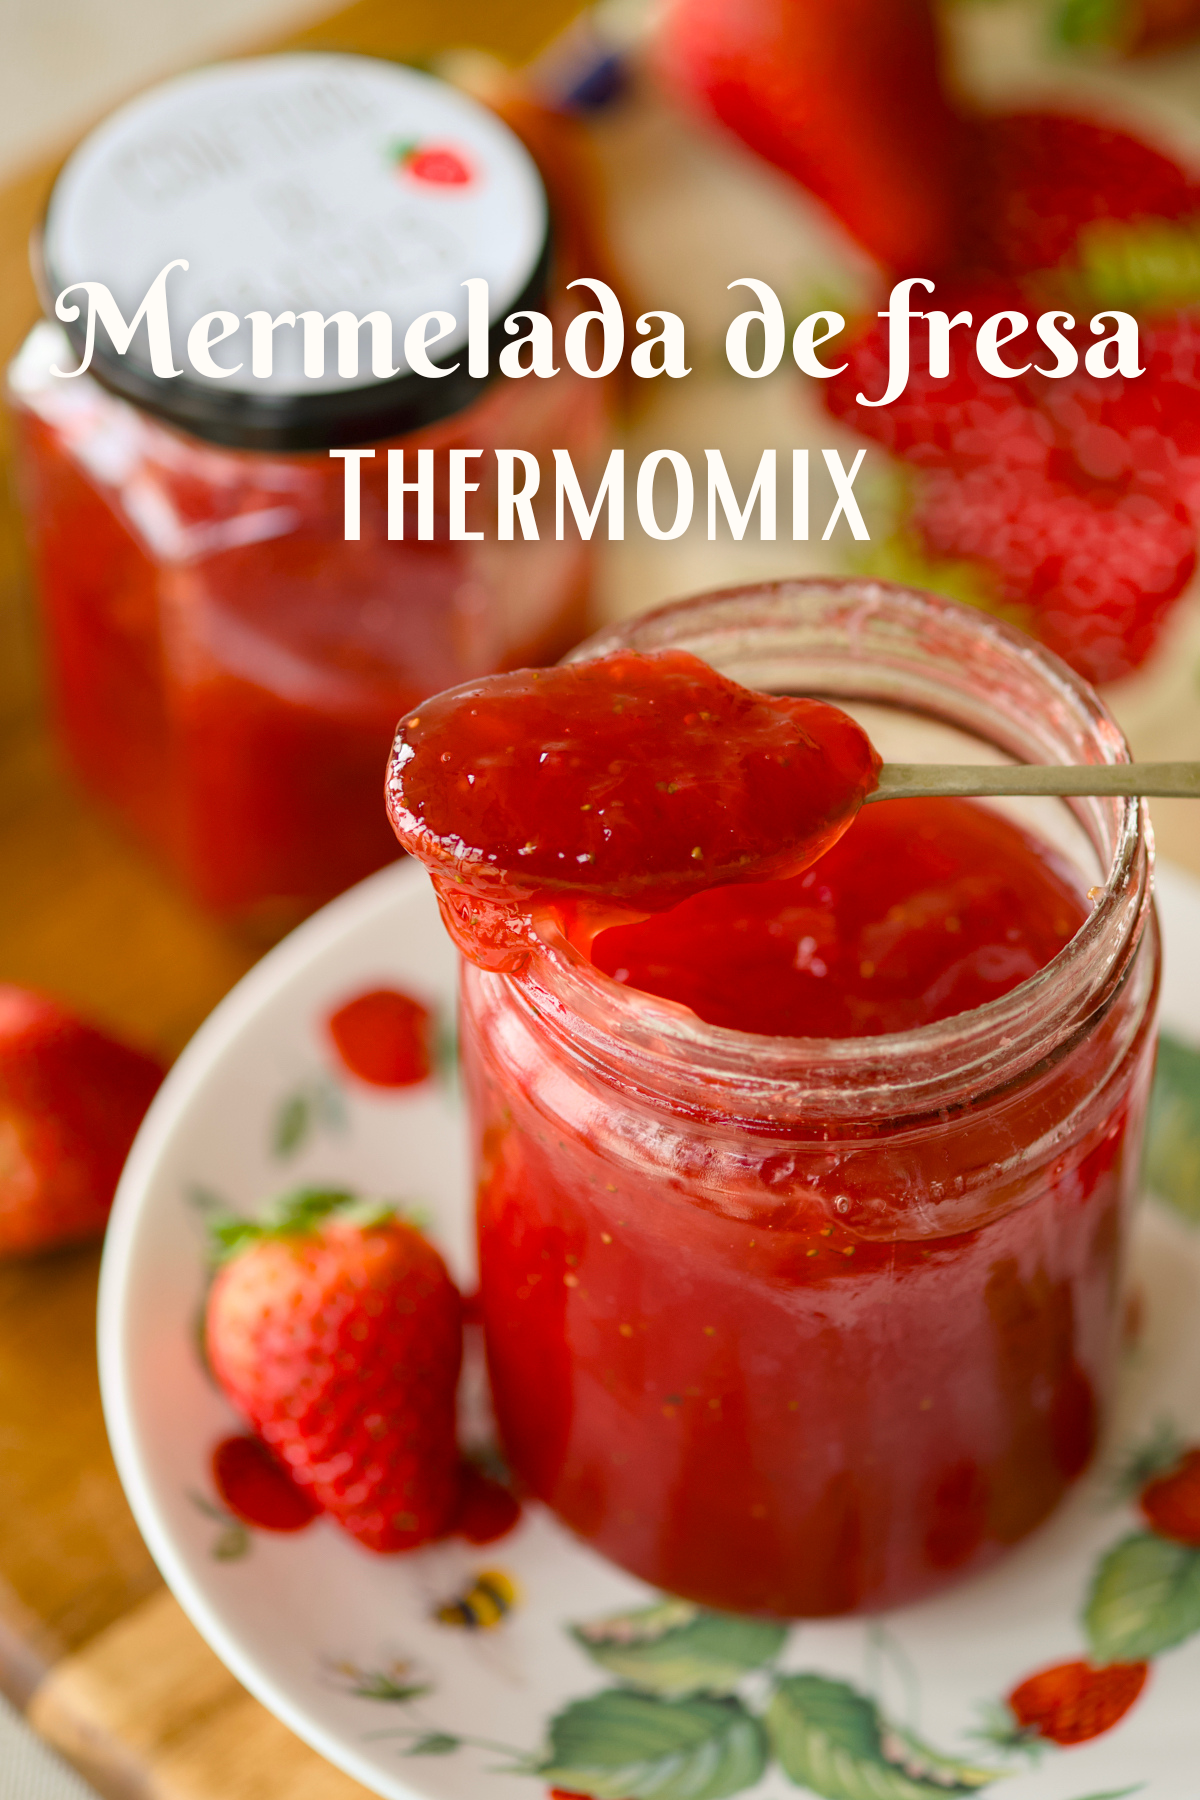 Mermelada de fresa con thermomix